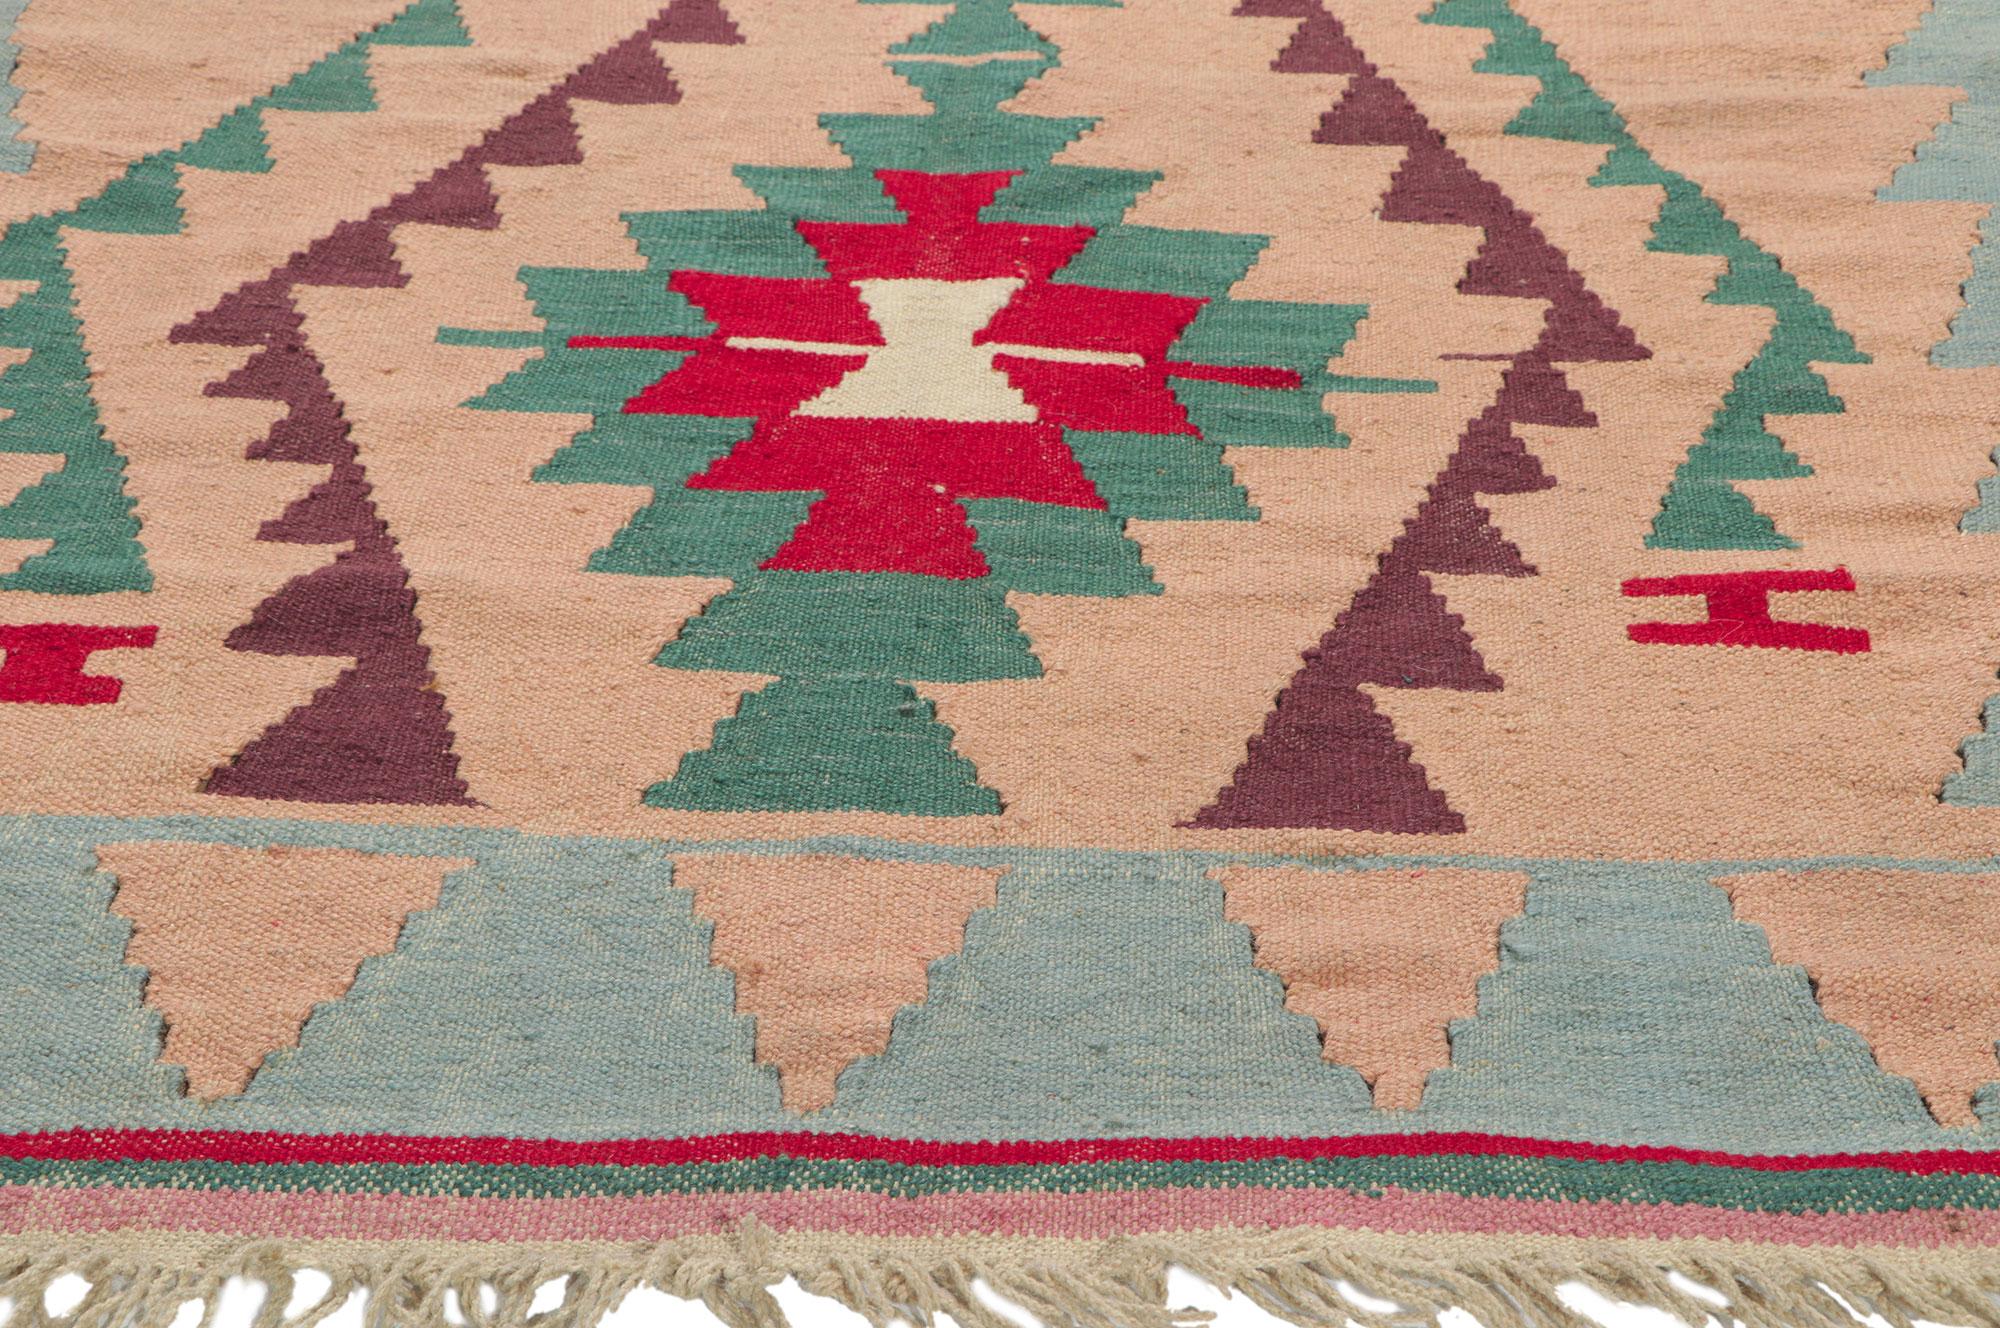 Hand-Woven Vintage Shiraz Kilim Rug, Southwest Desert Meets Boho Chic For Sale